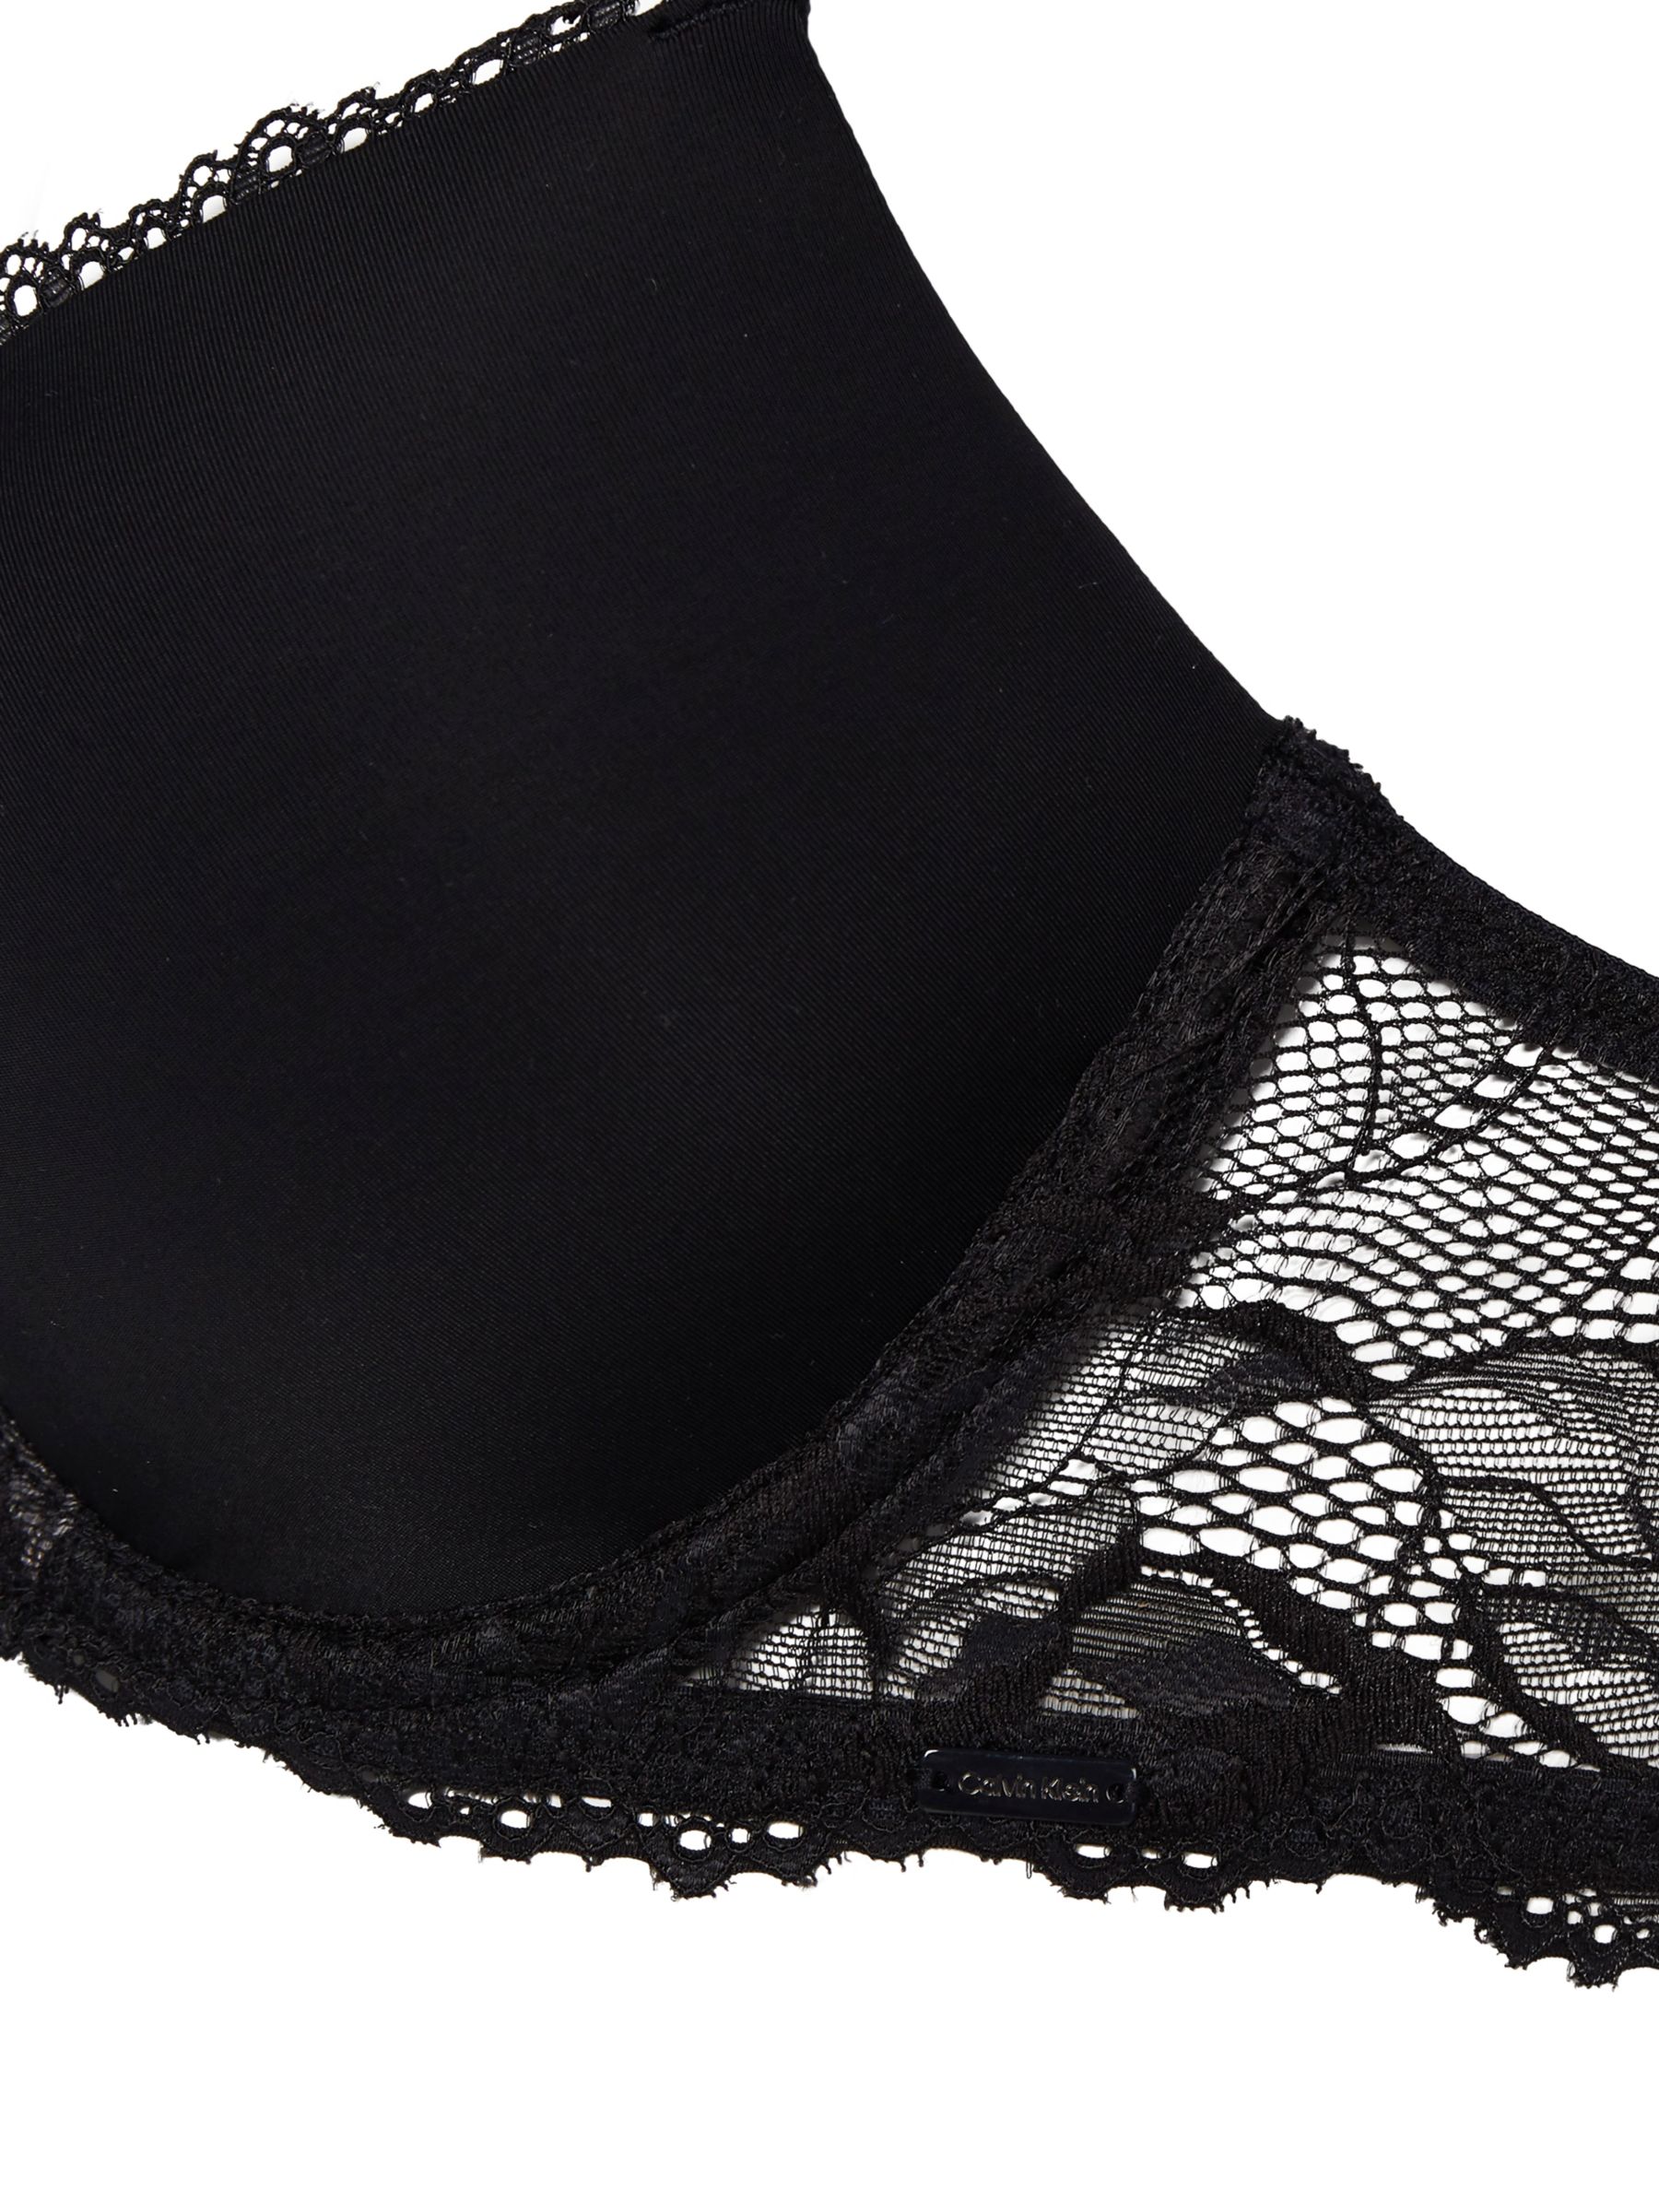 Calvin Klein Underwear Women's Seductive Comfort Lotus Floral Lift Demi Bra